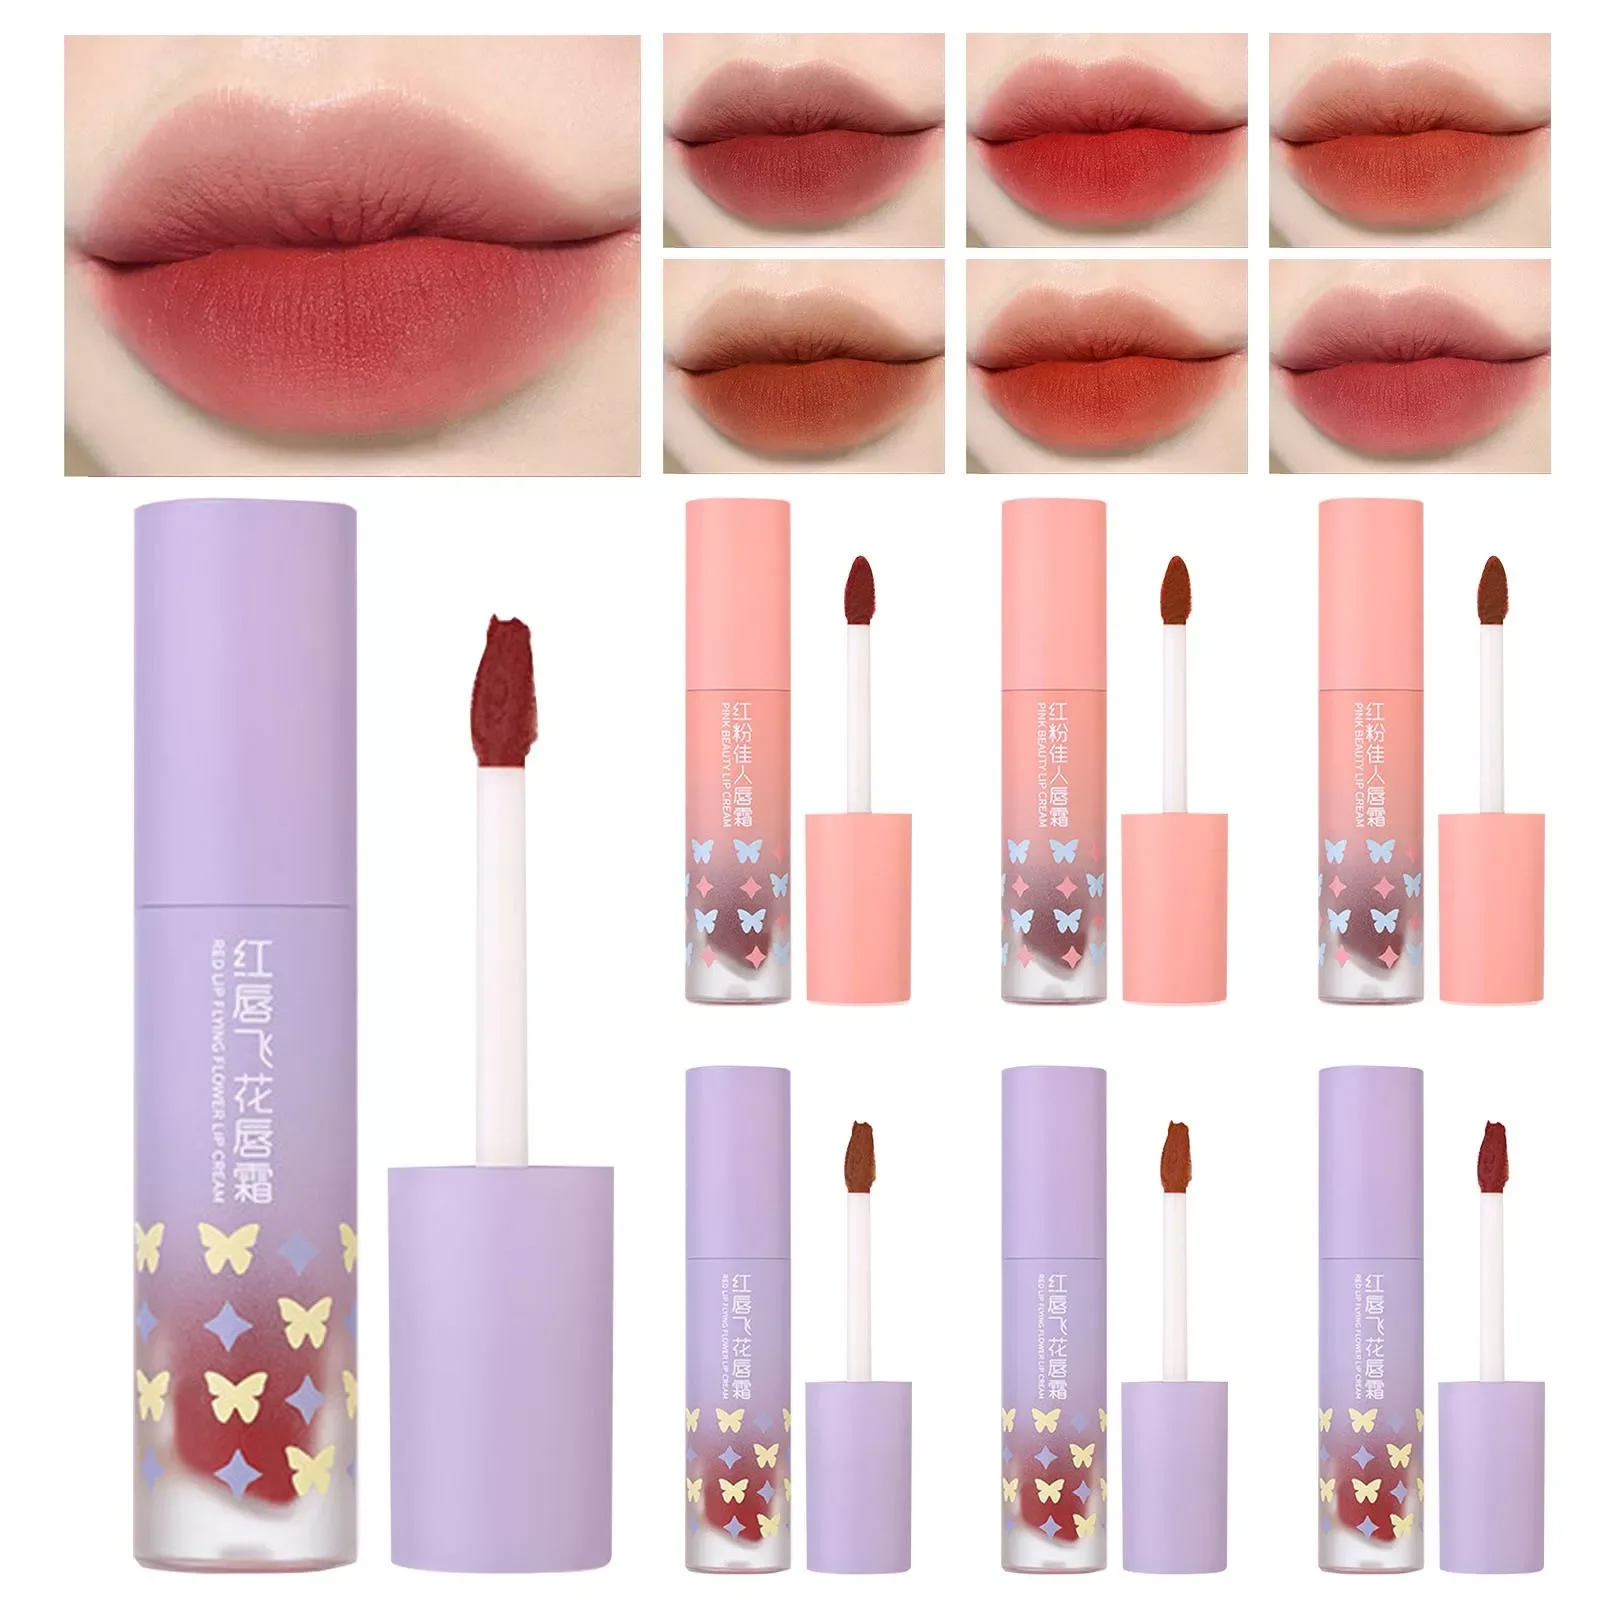 

NEW Lipstick Soft Mist Portable Moisturizing Lip Gloss Kits for Little Girls Beauty Bright Flower Crystal Jelly Lipstick Big Pac